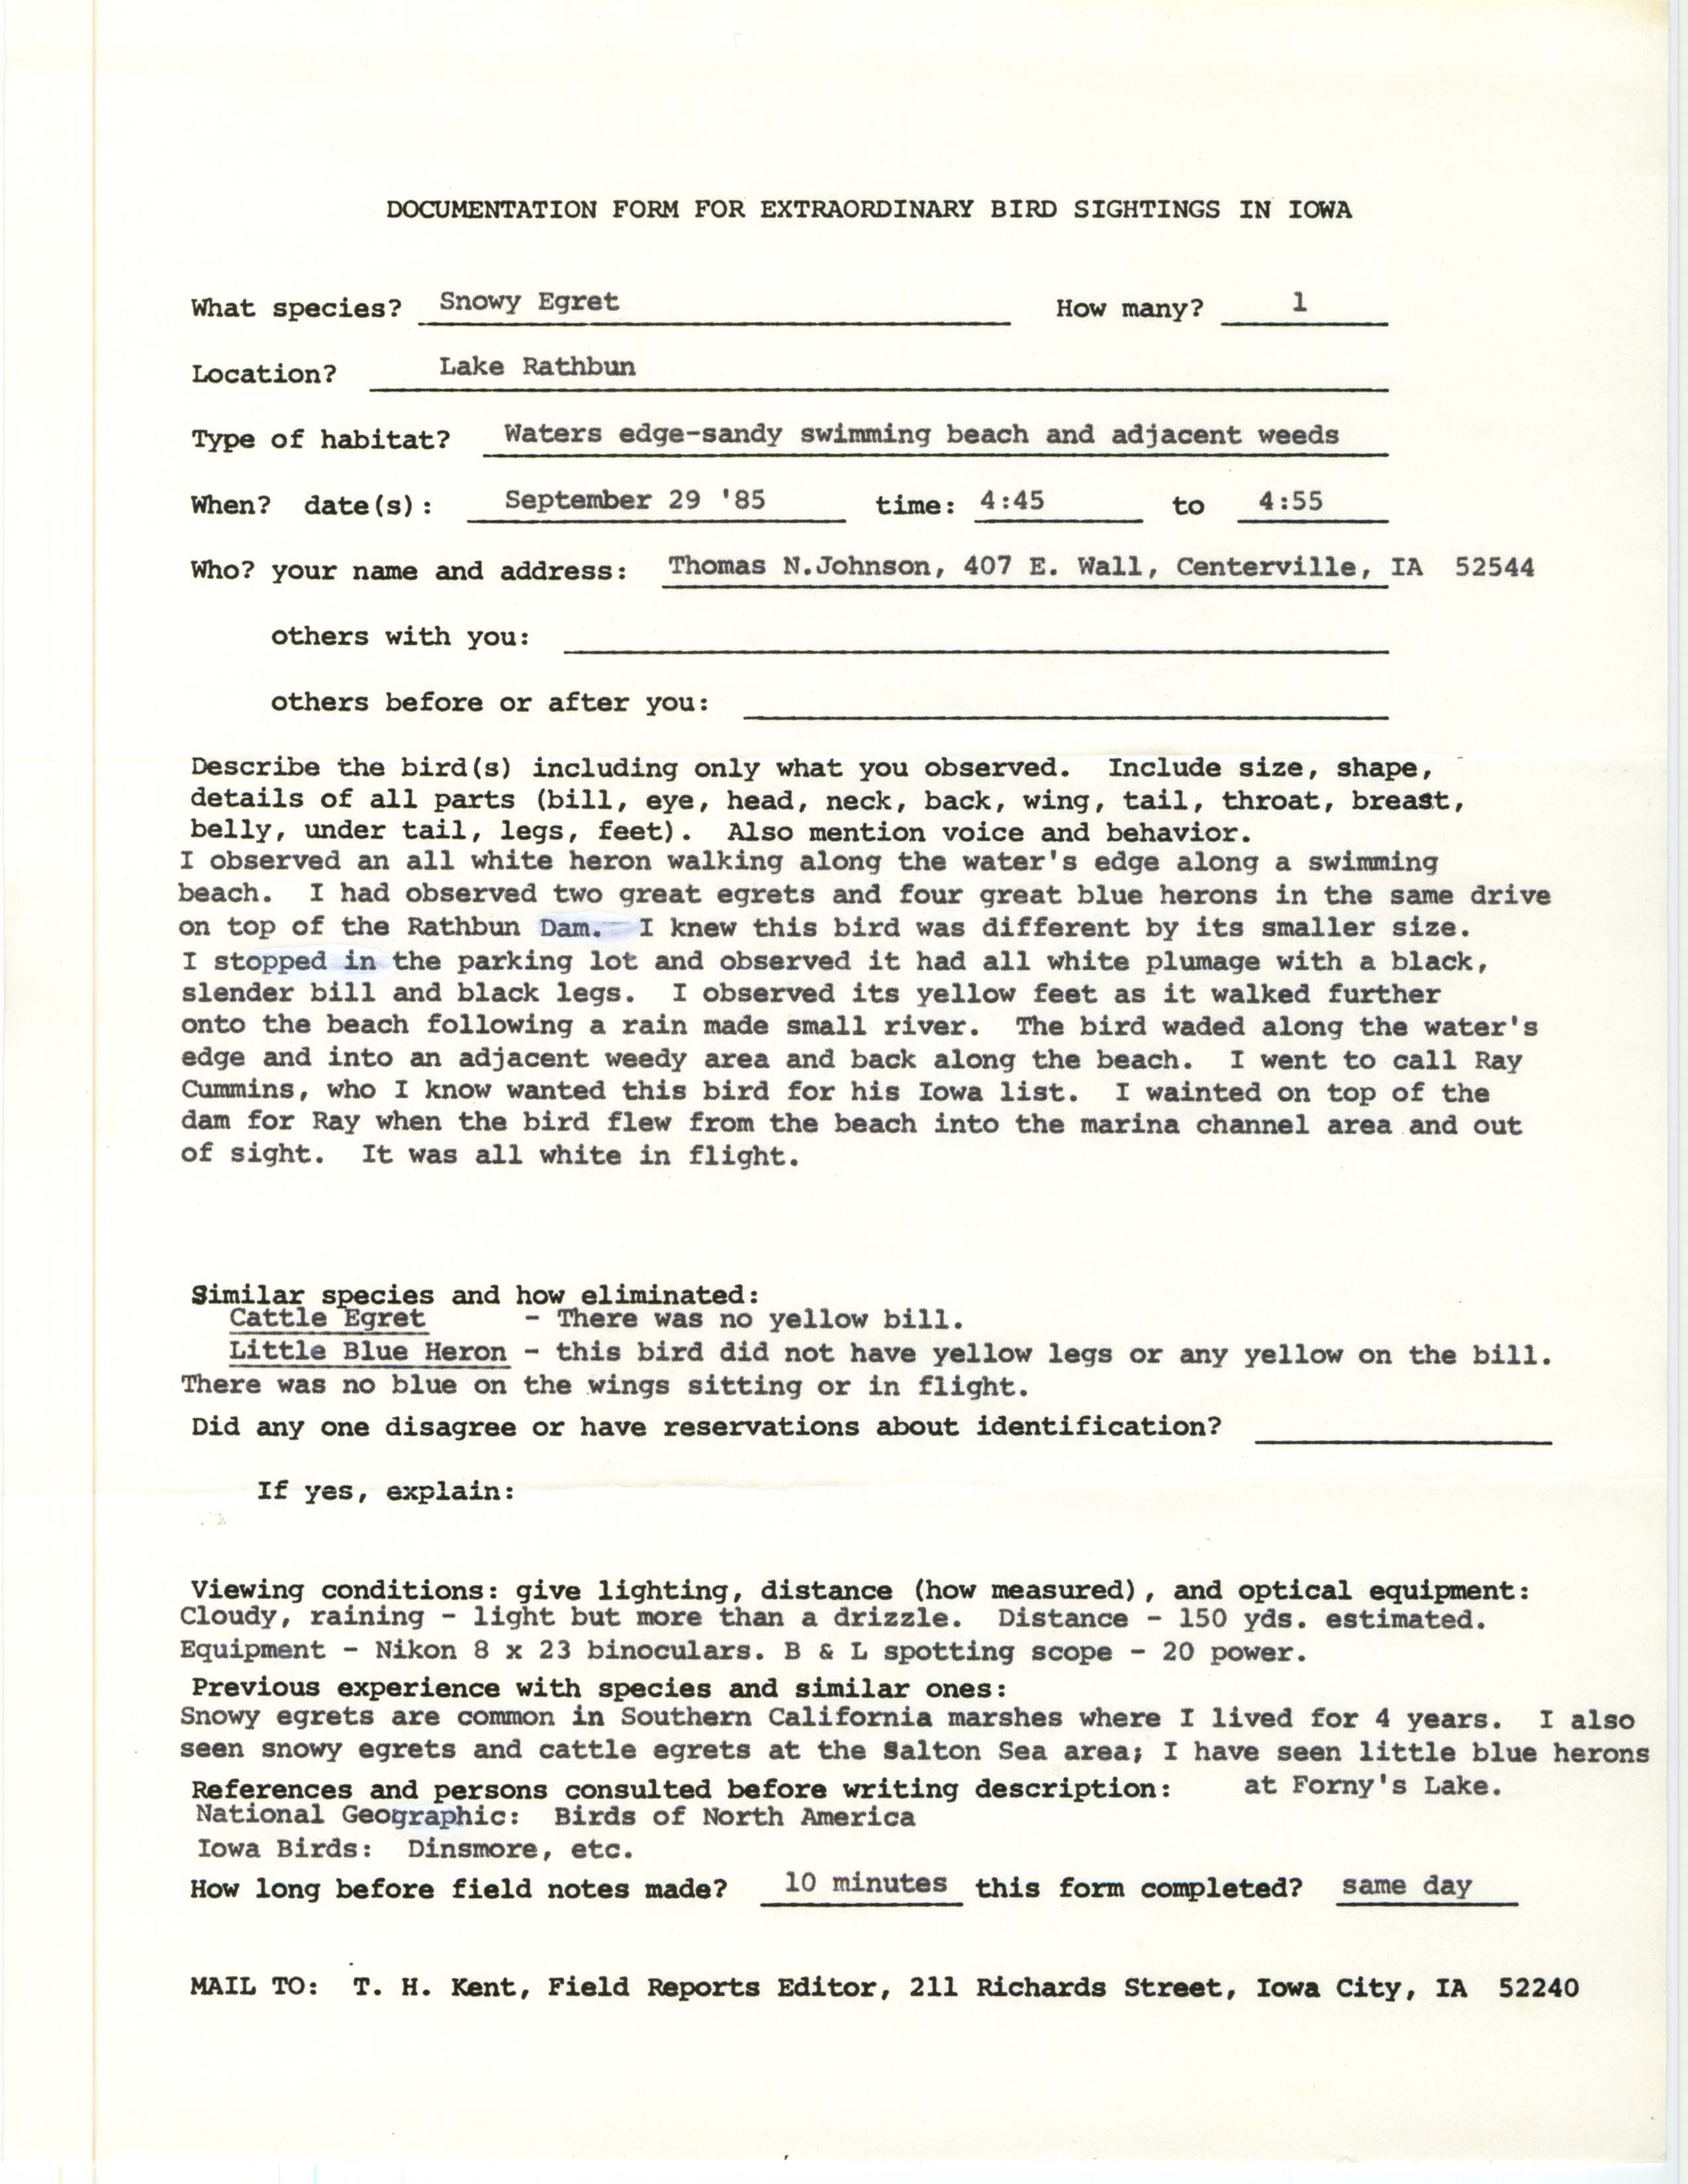 Rare bird documentation form for Snowy Egret at Lake Rathbun, 1985